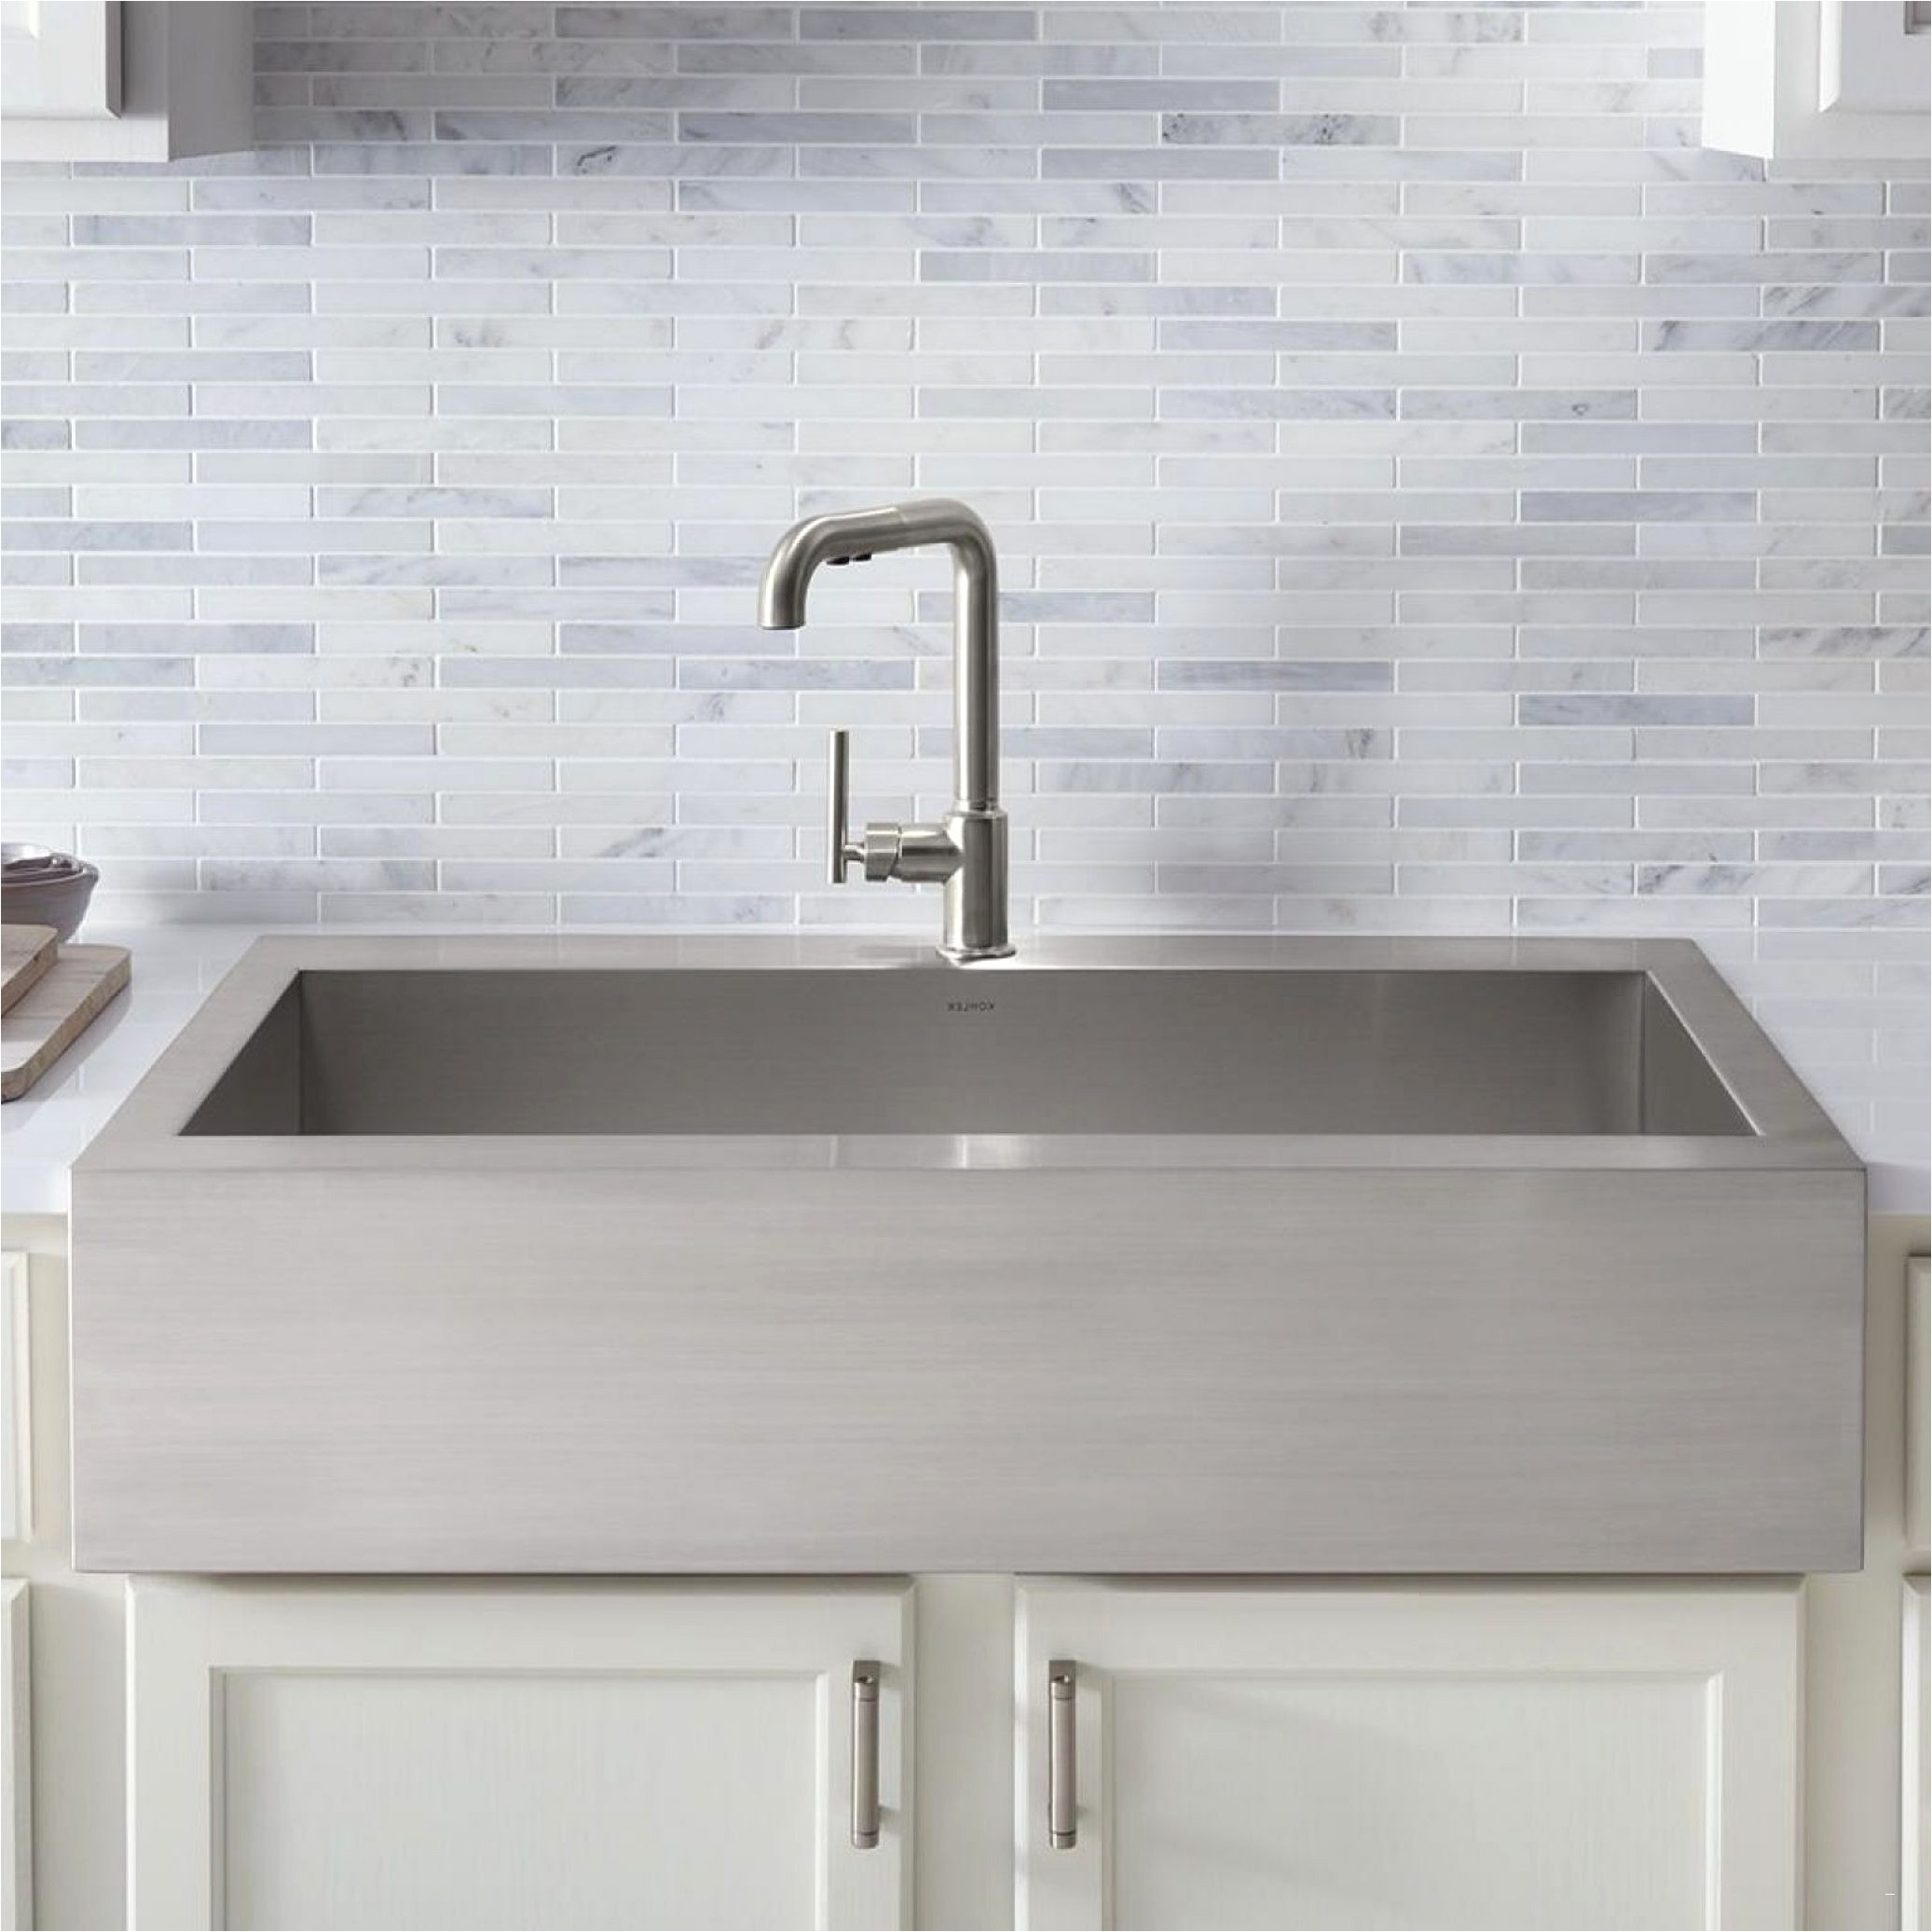 waterridge kitchen faucet luxury 30 new sink kitchen